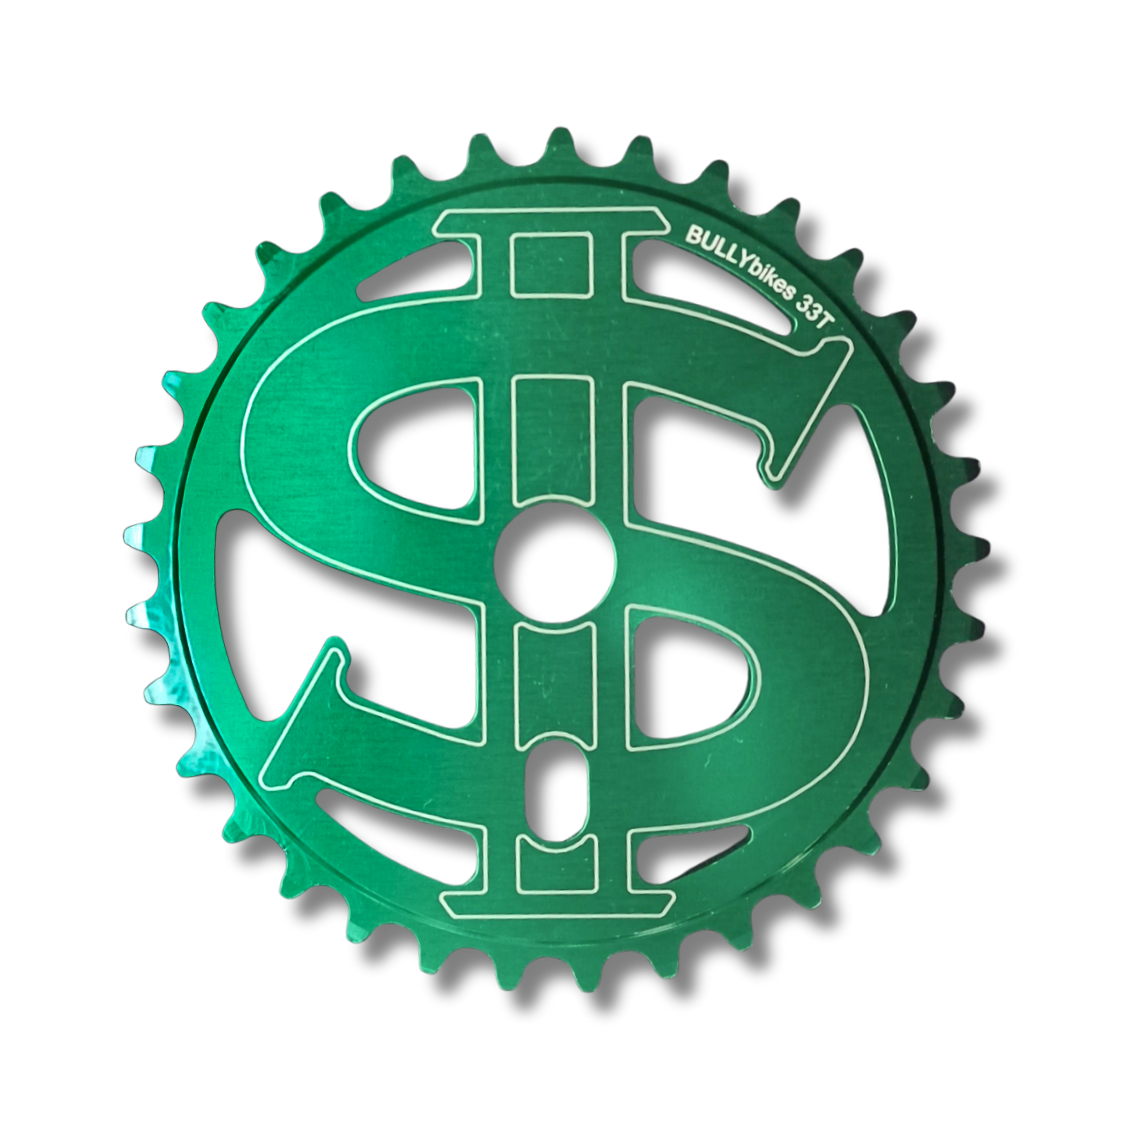 Bully Big Money 39t BMX Sprocket / Chainwheel - Green - USA Made